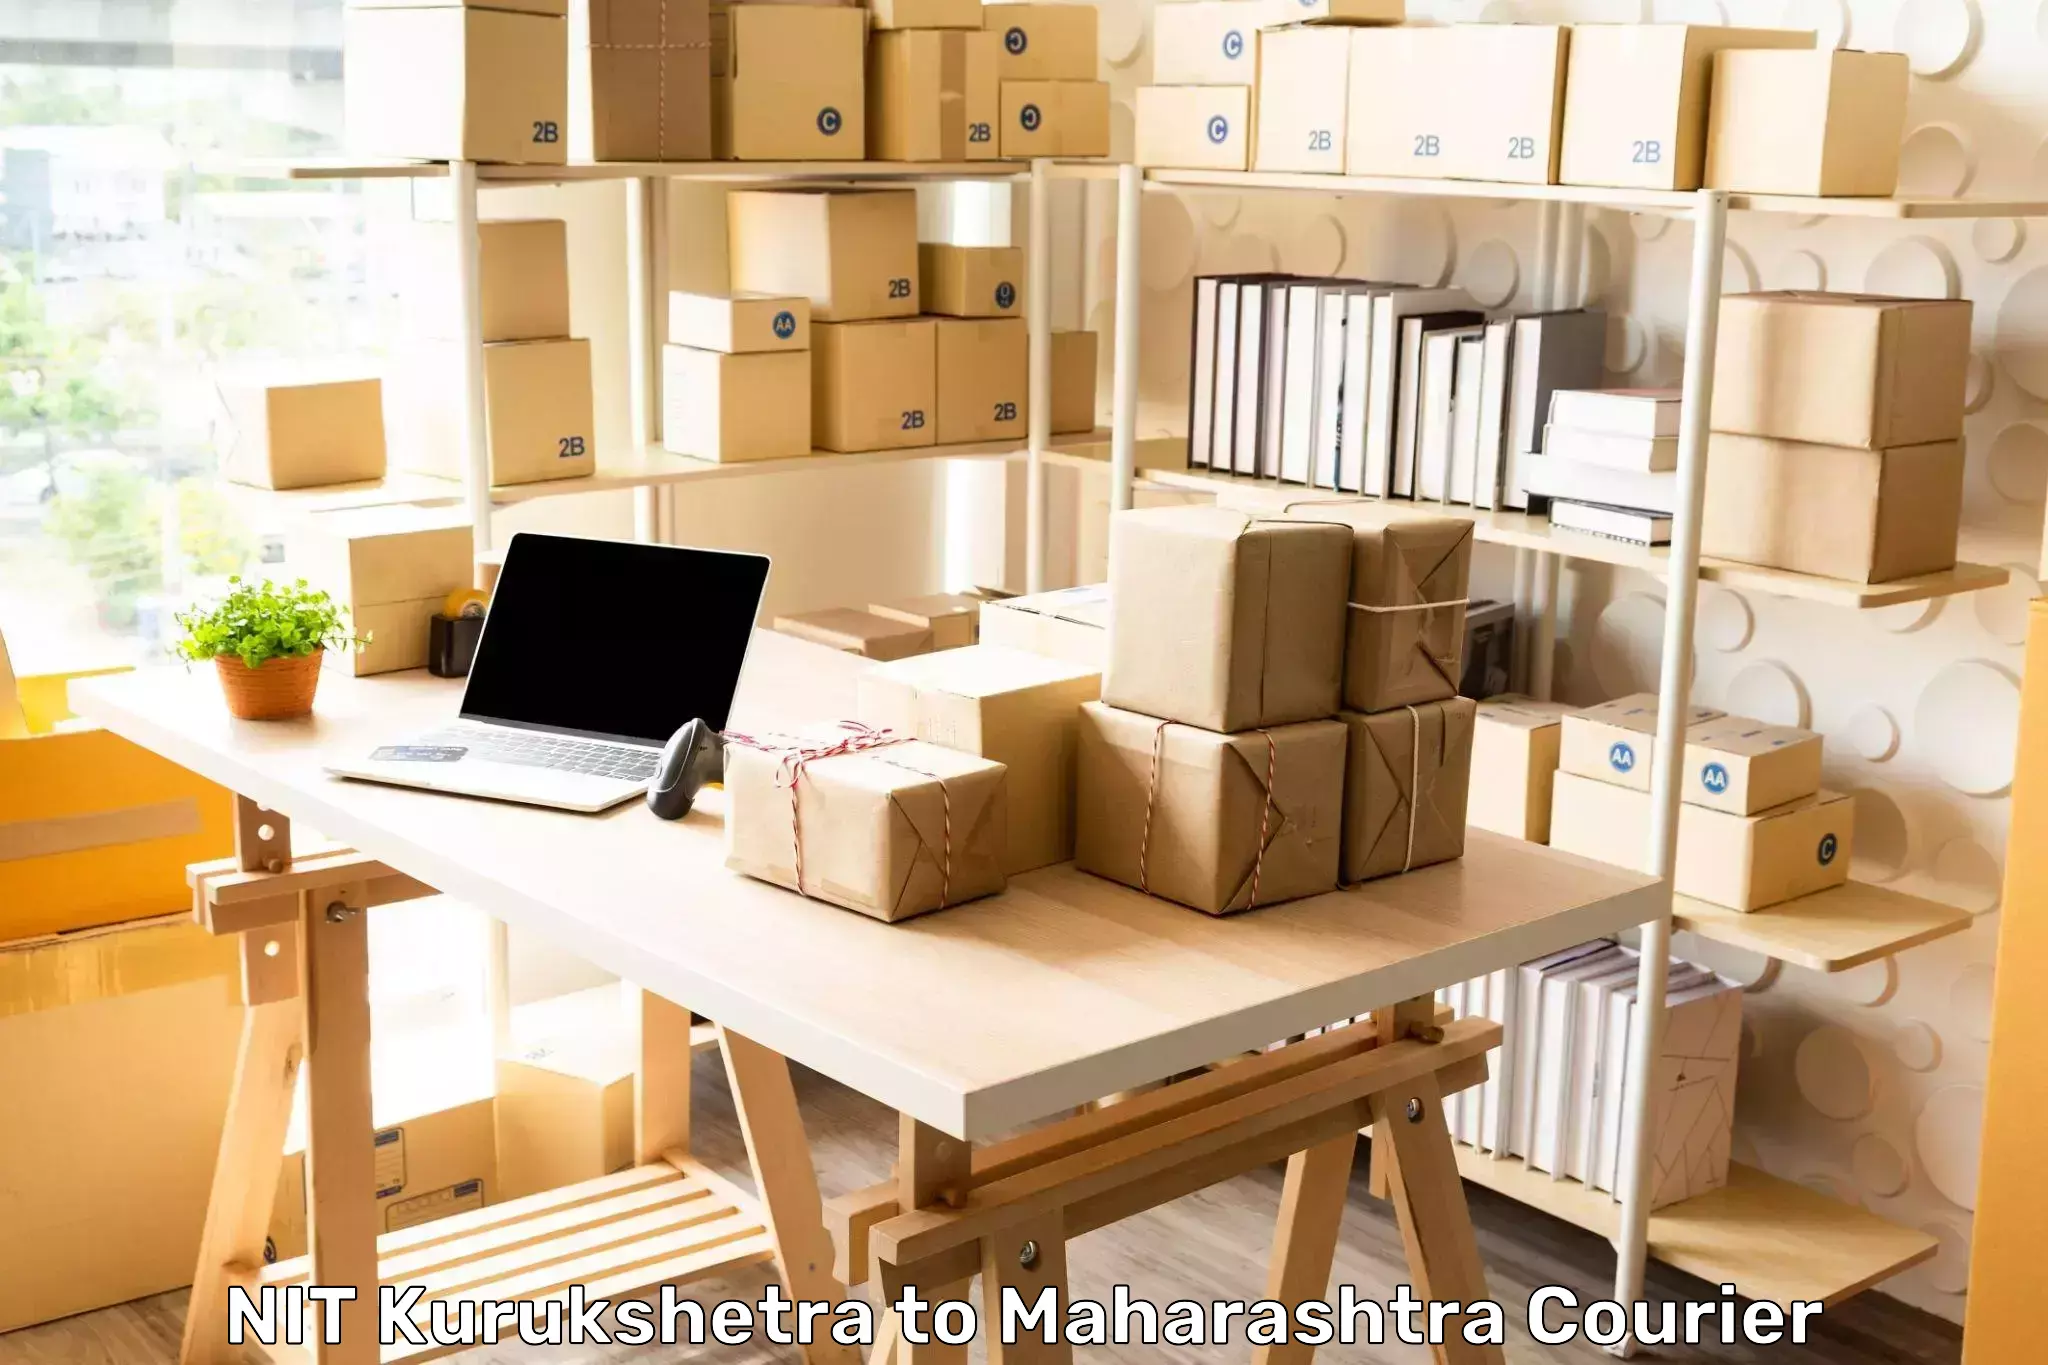 Package delivery network NIT Kurukshetra to Daund